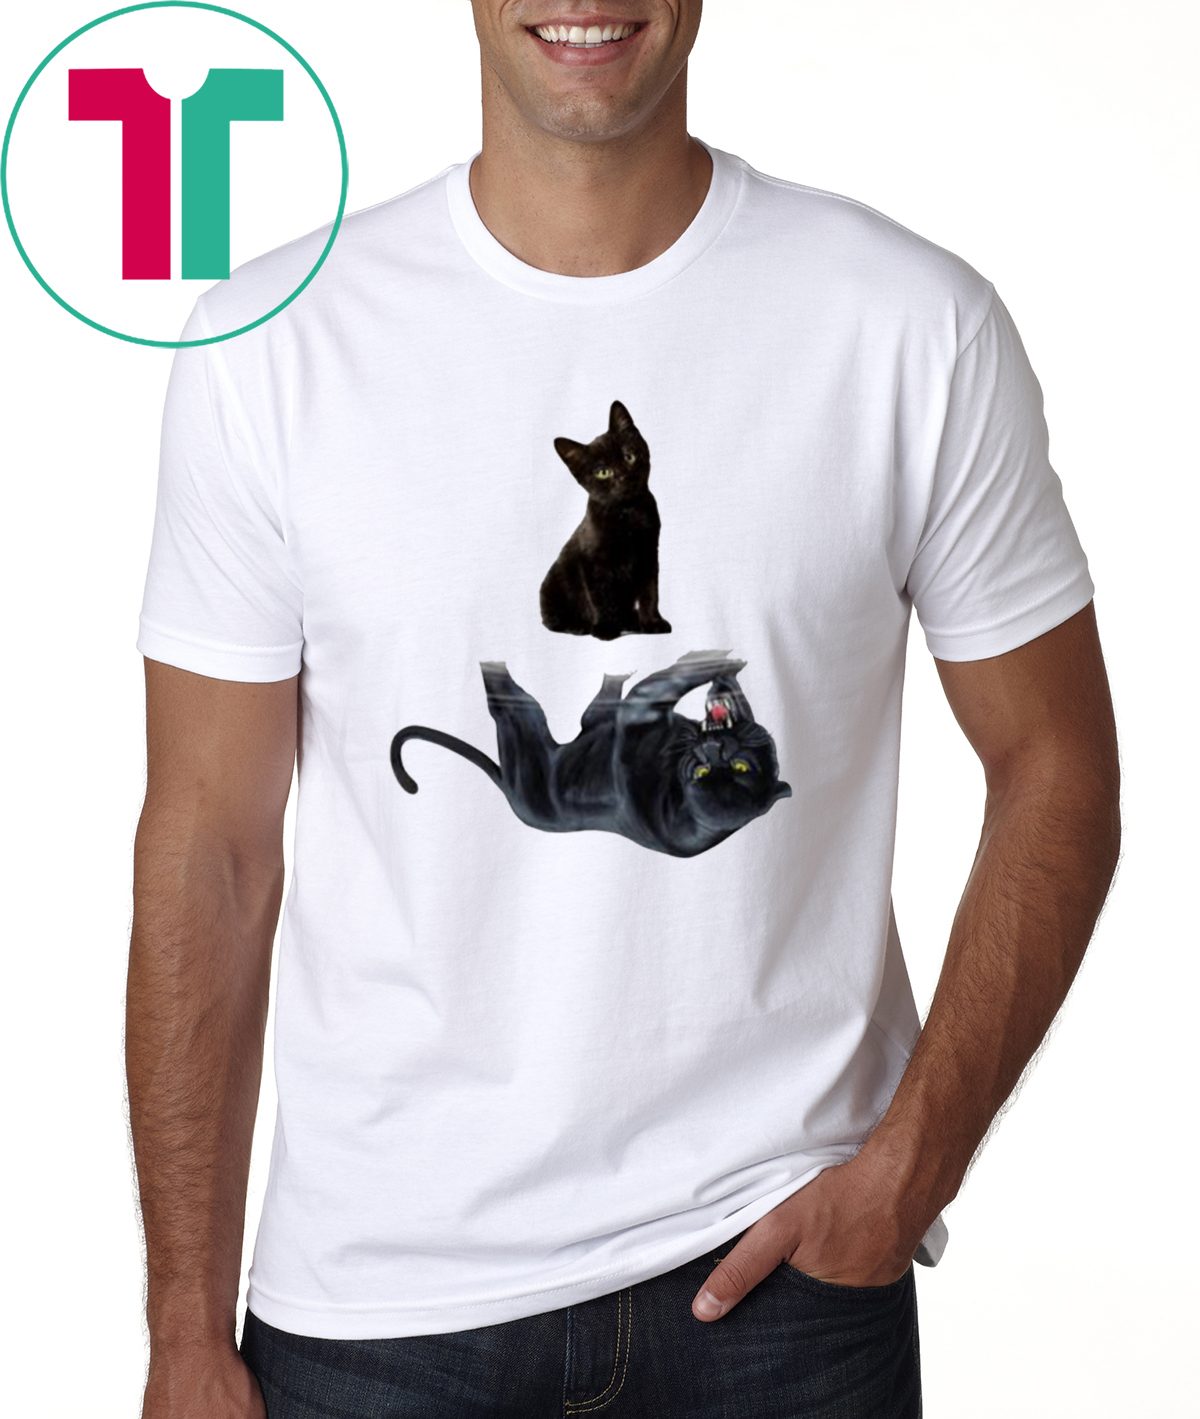 Black cat water reflection mirror black panther shirt - Reviewshirts Office